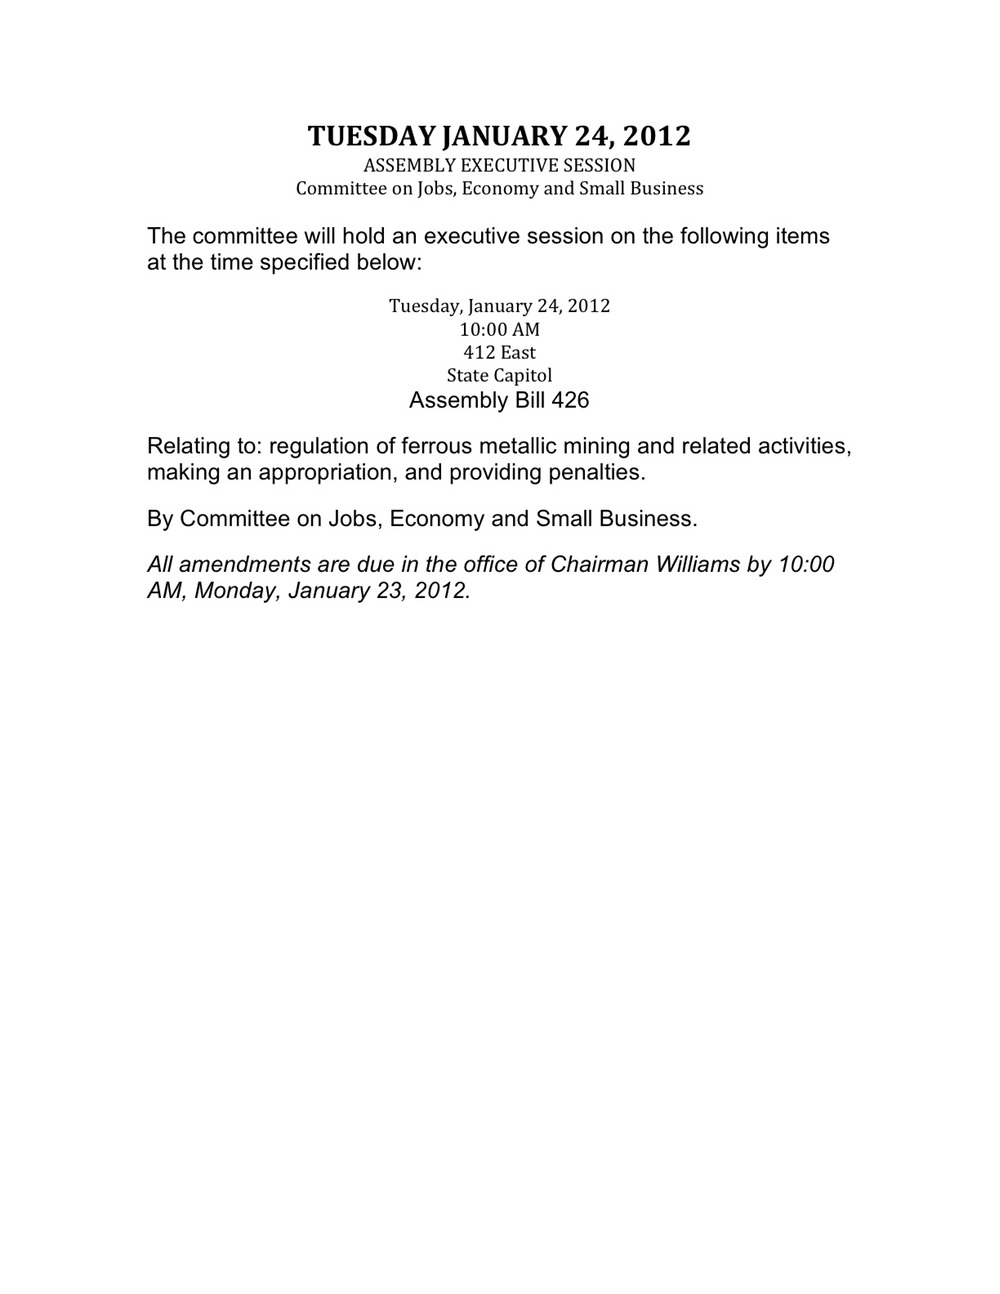 Jan. 24 Madison Committee Amendments